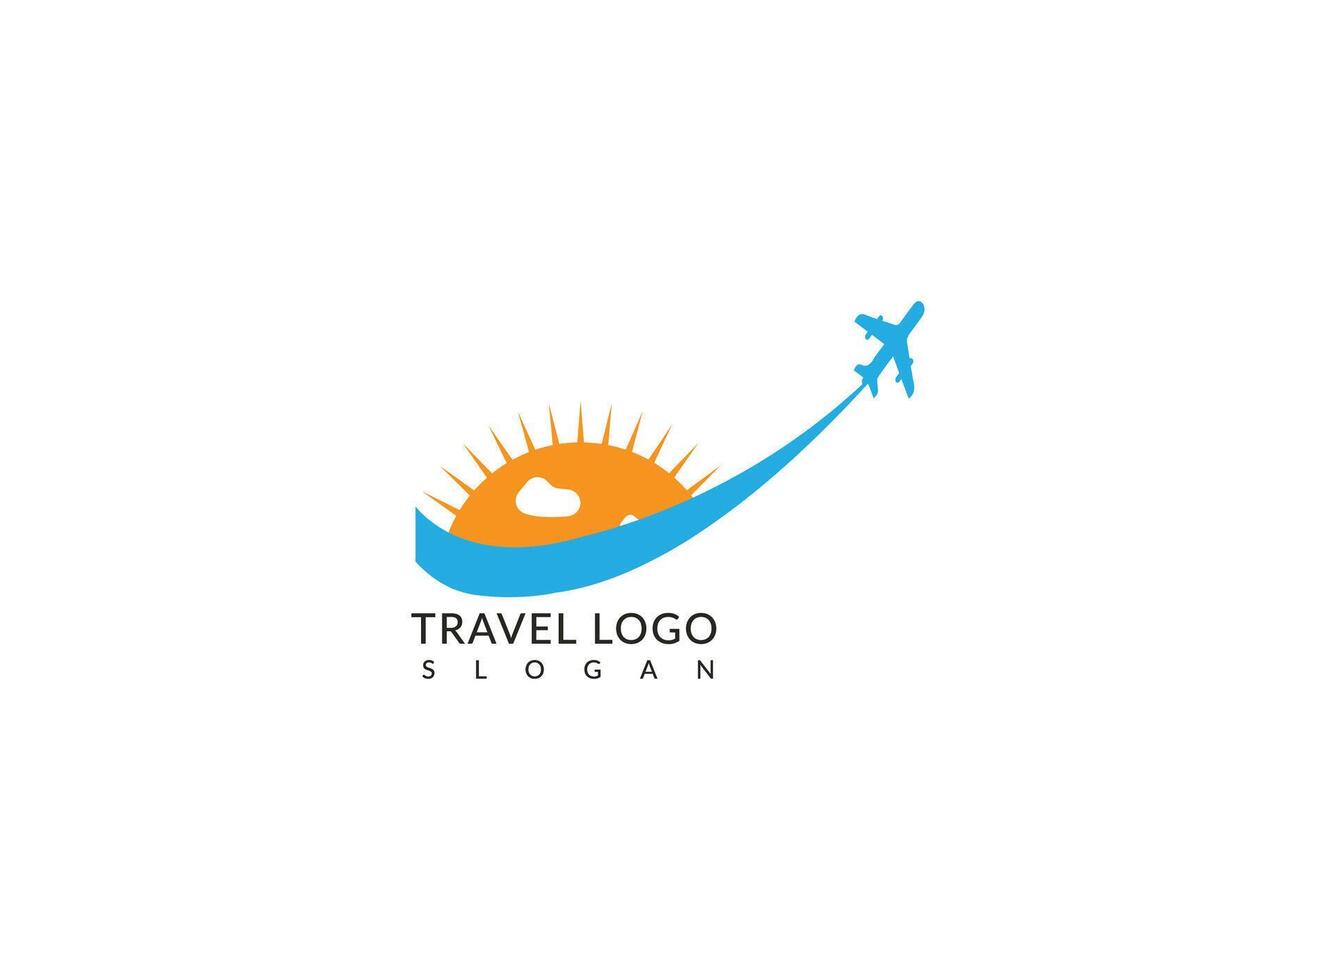 Travel logo design inspiration vector template